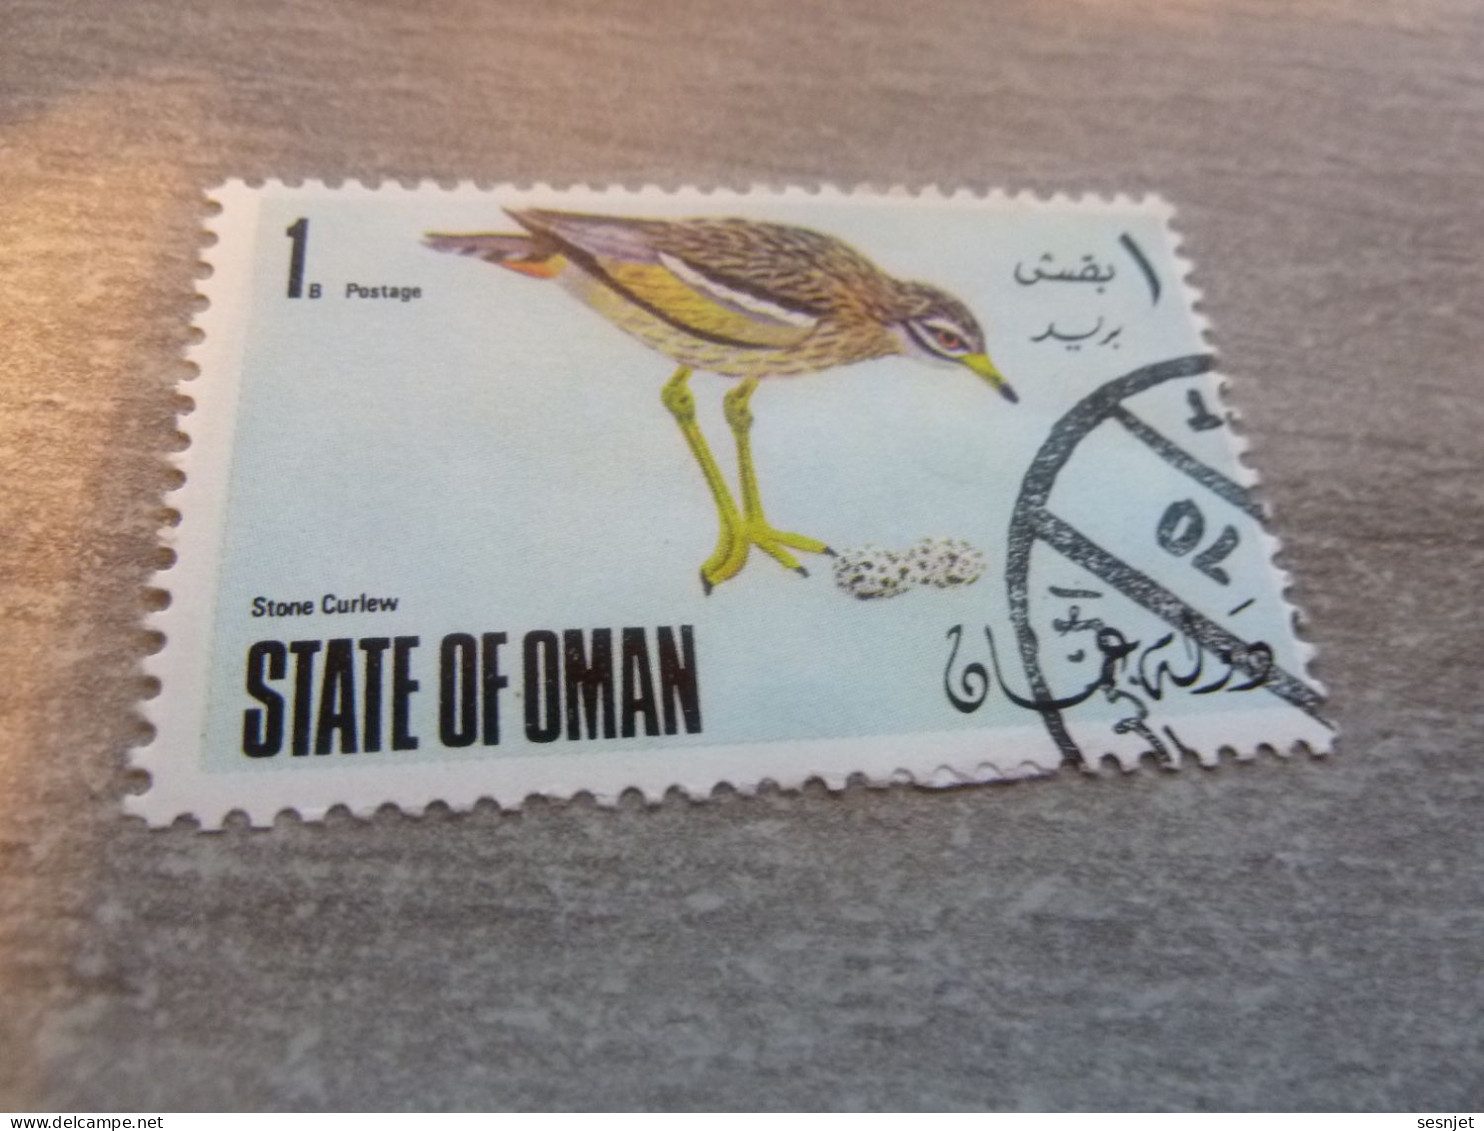 State Of Oman - Stone Curlew -  Val 1 B - Postage - Polychrome - Oblitéré - Année 1970 - - Passeri